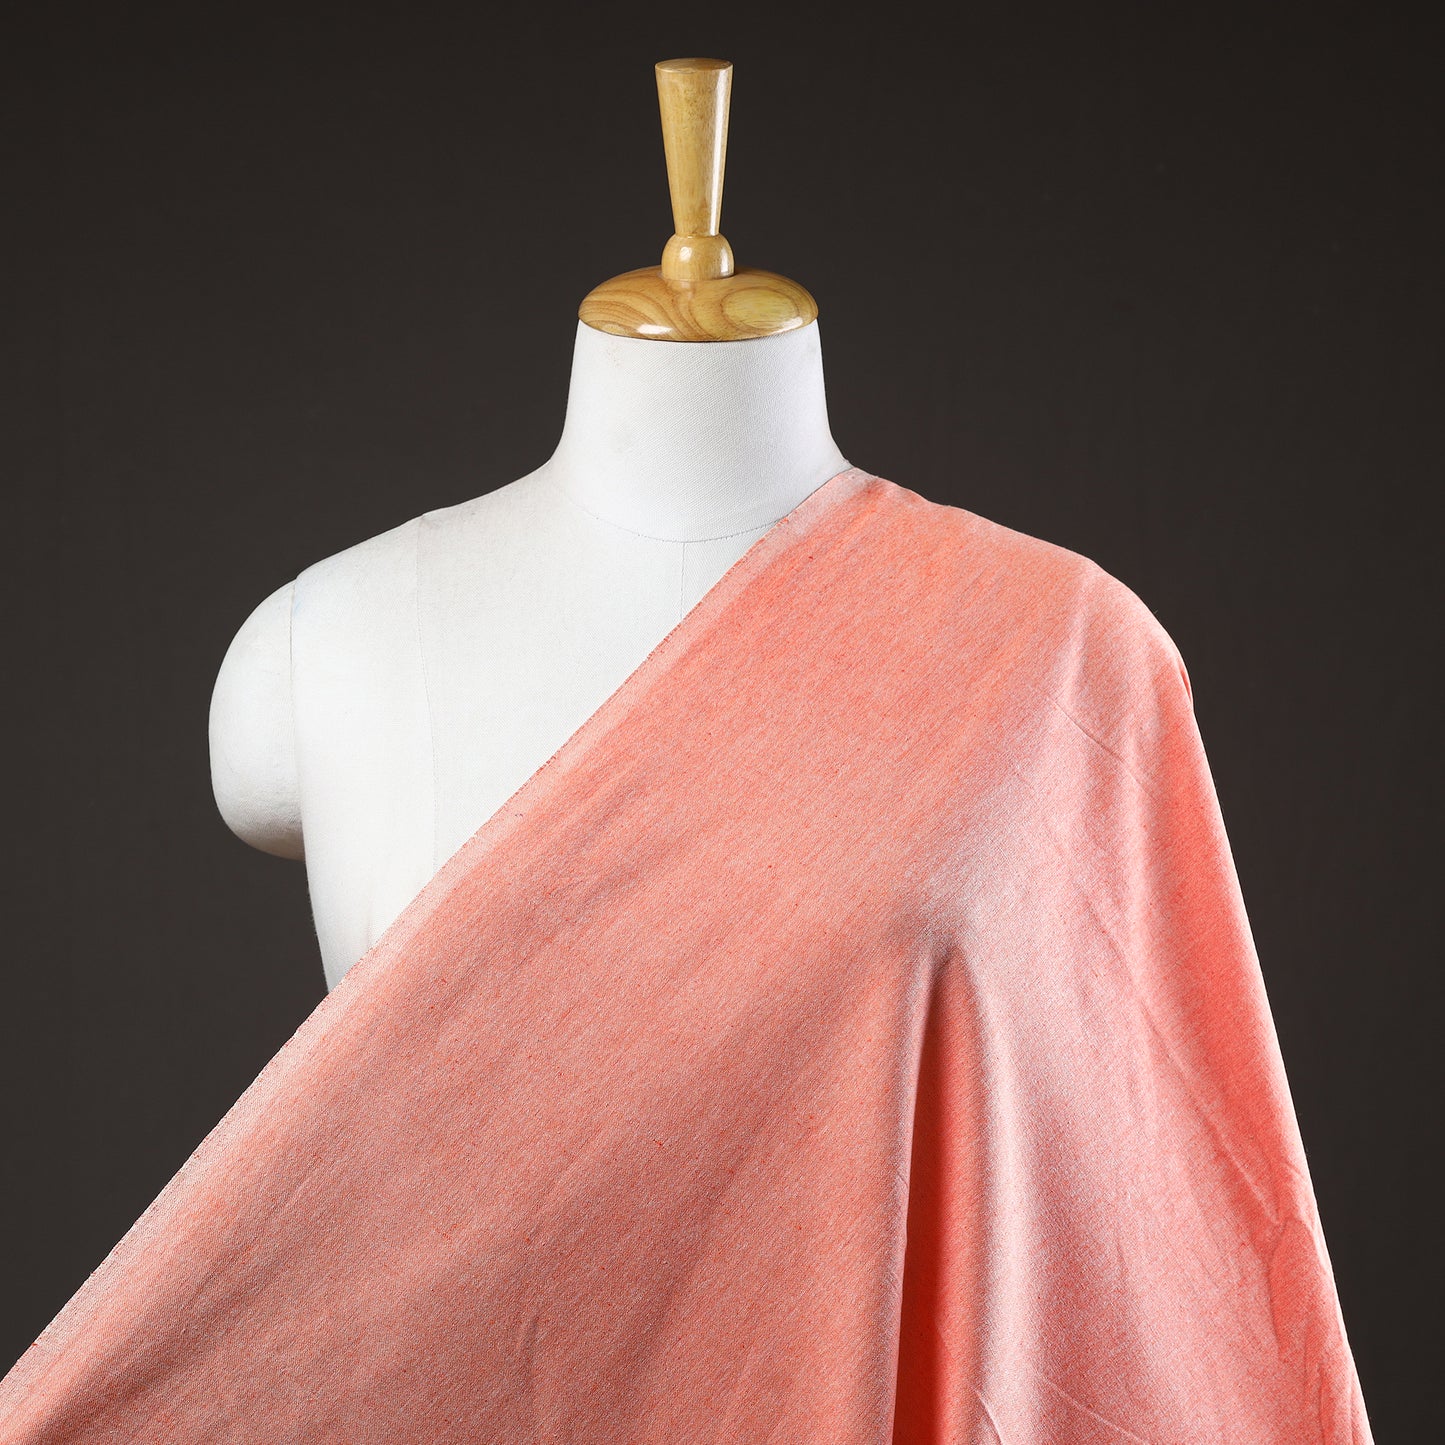 Peach - Jhiri Pure Handloom Cotton Fabric 07